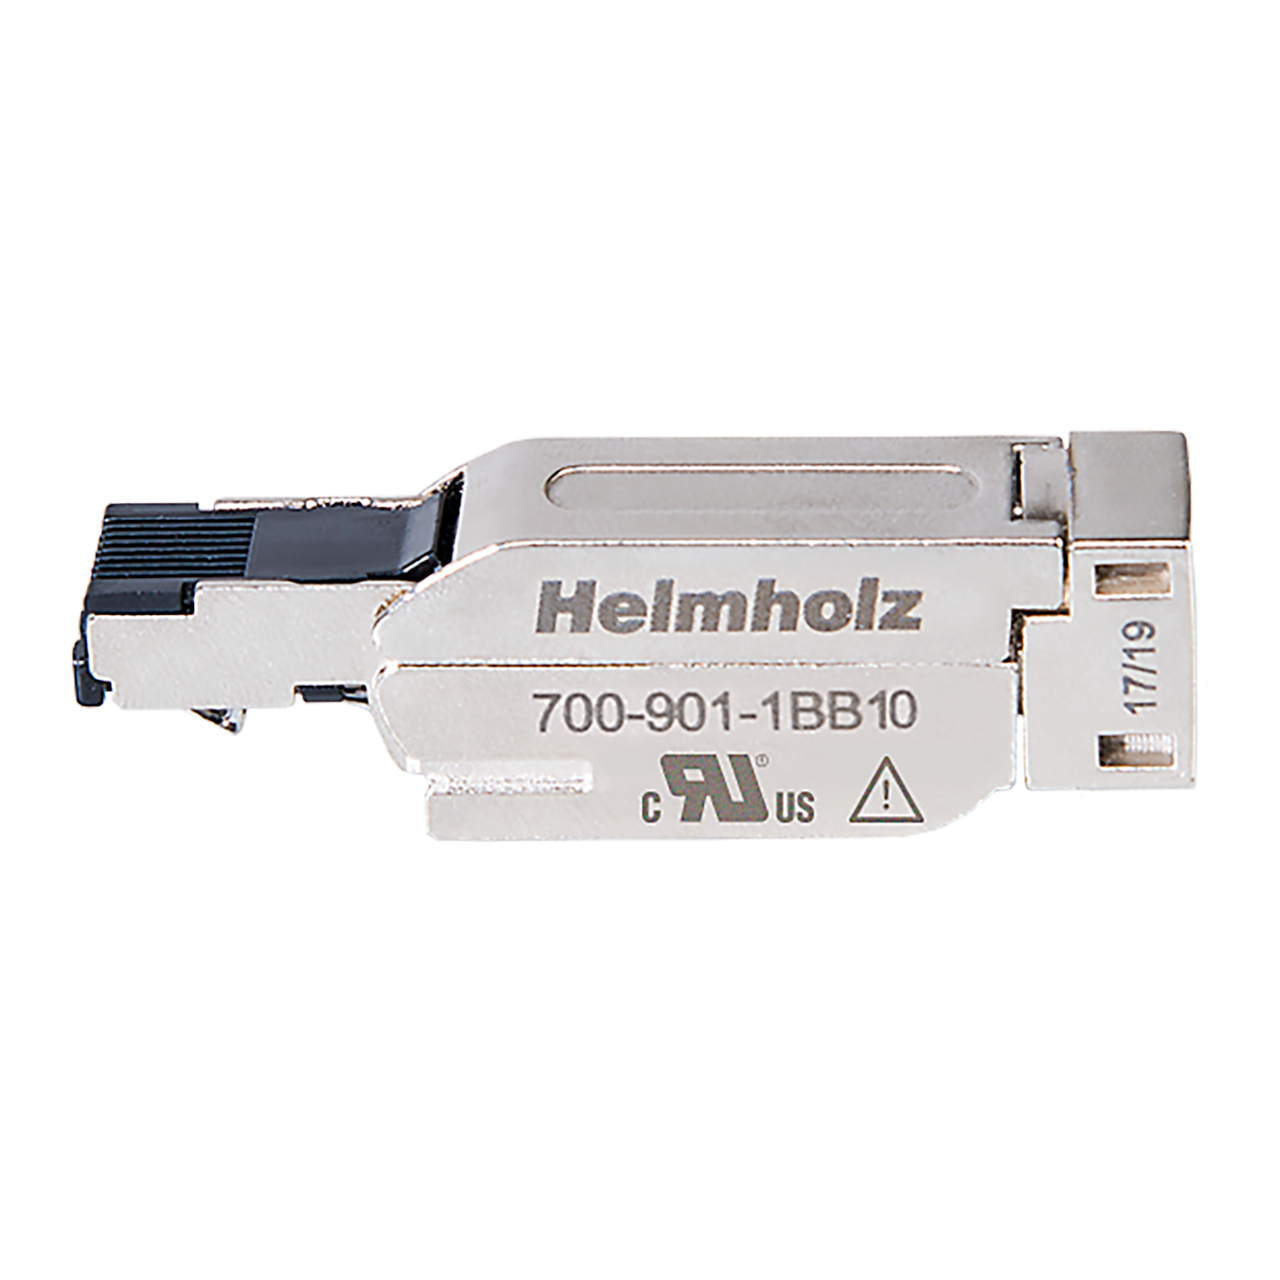 Helmholz conector PROFINET, RJ45, 180° EasyConnect©, 10/100 Mbps 700-901-1BB10